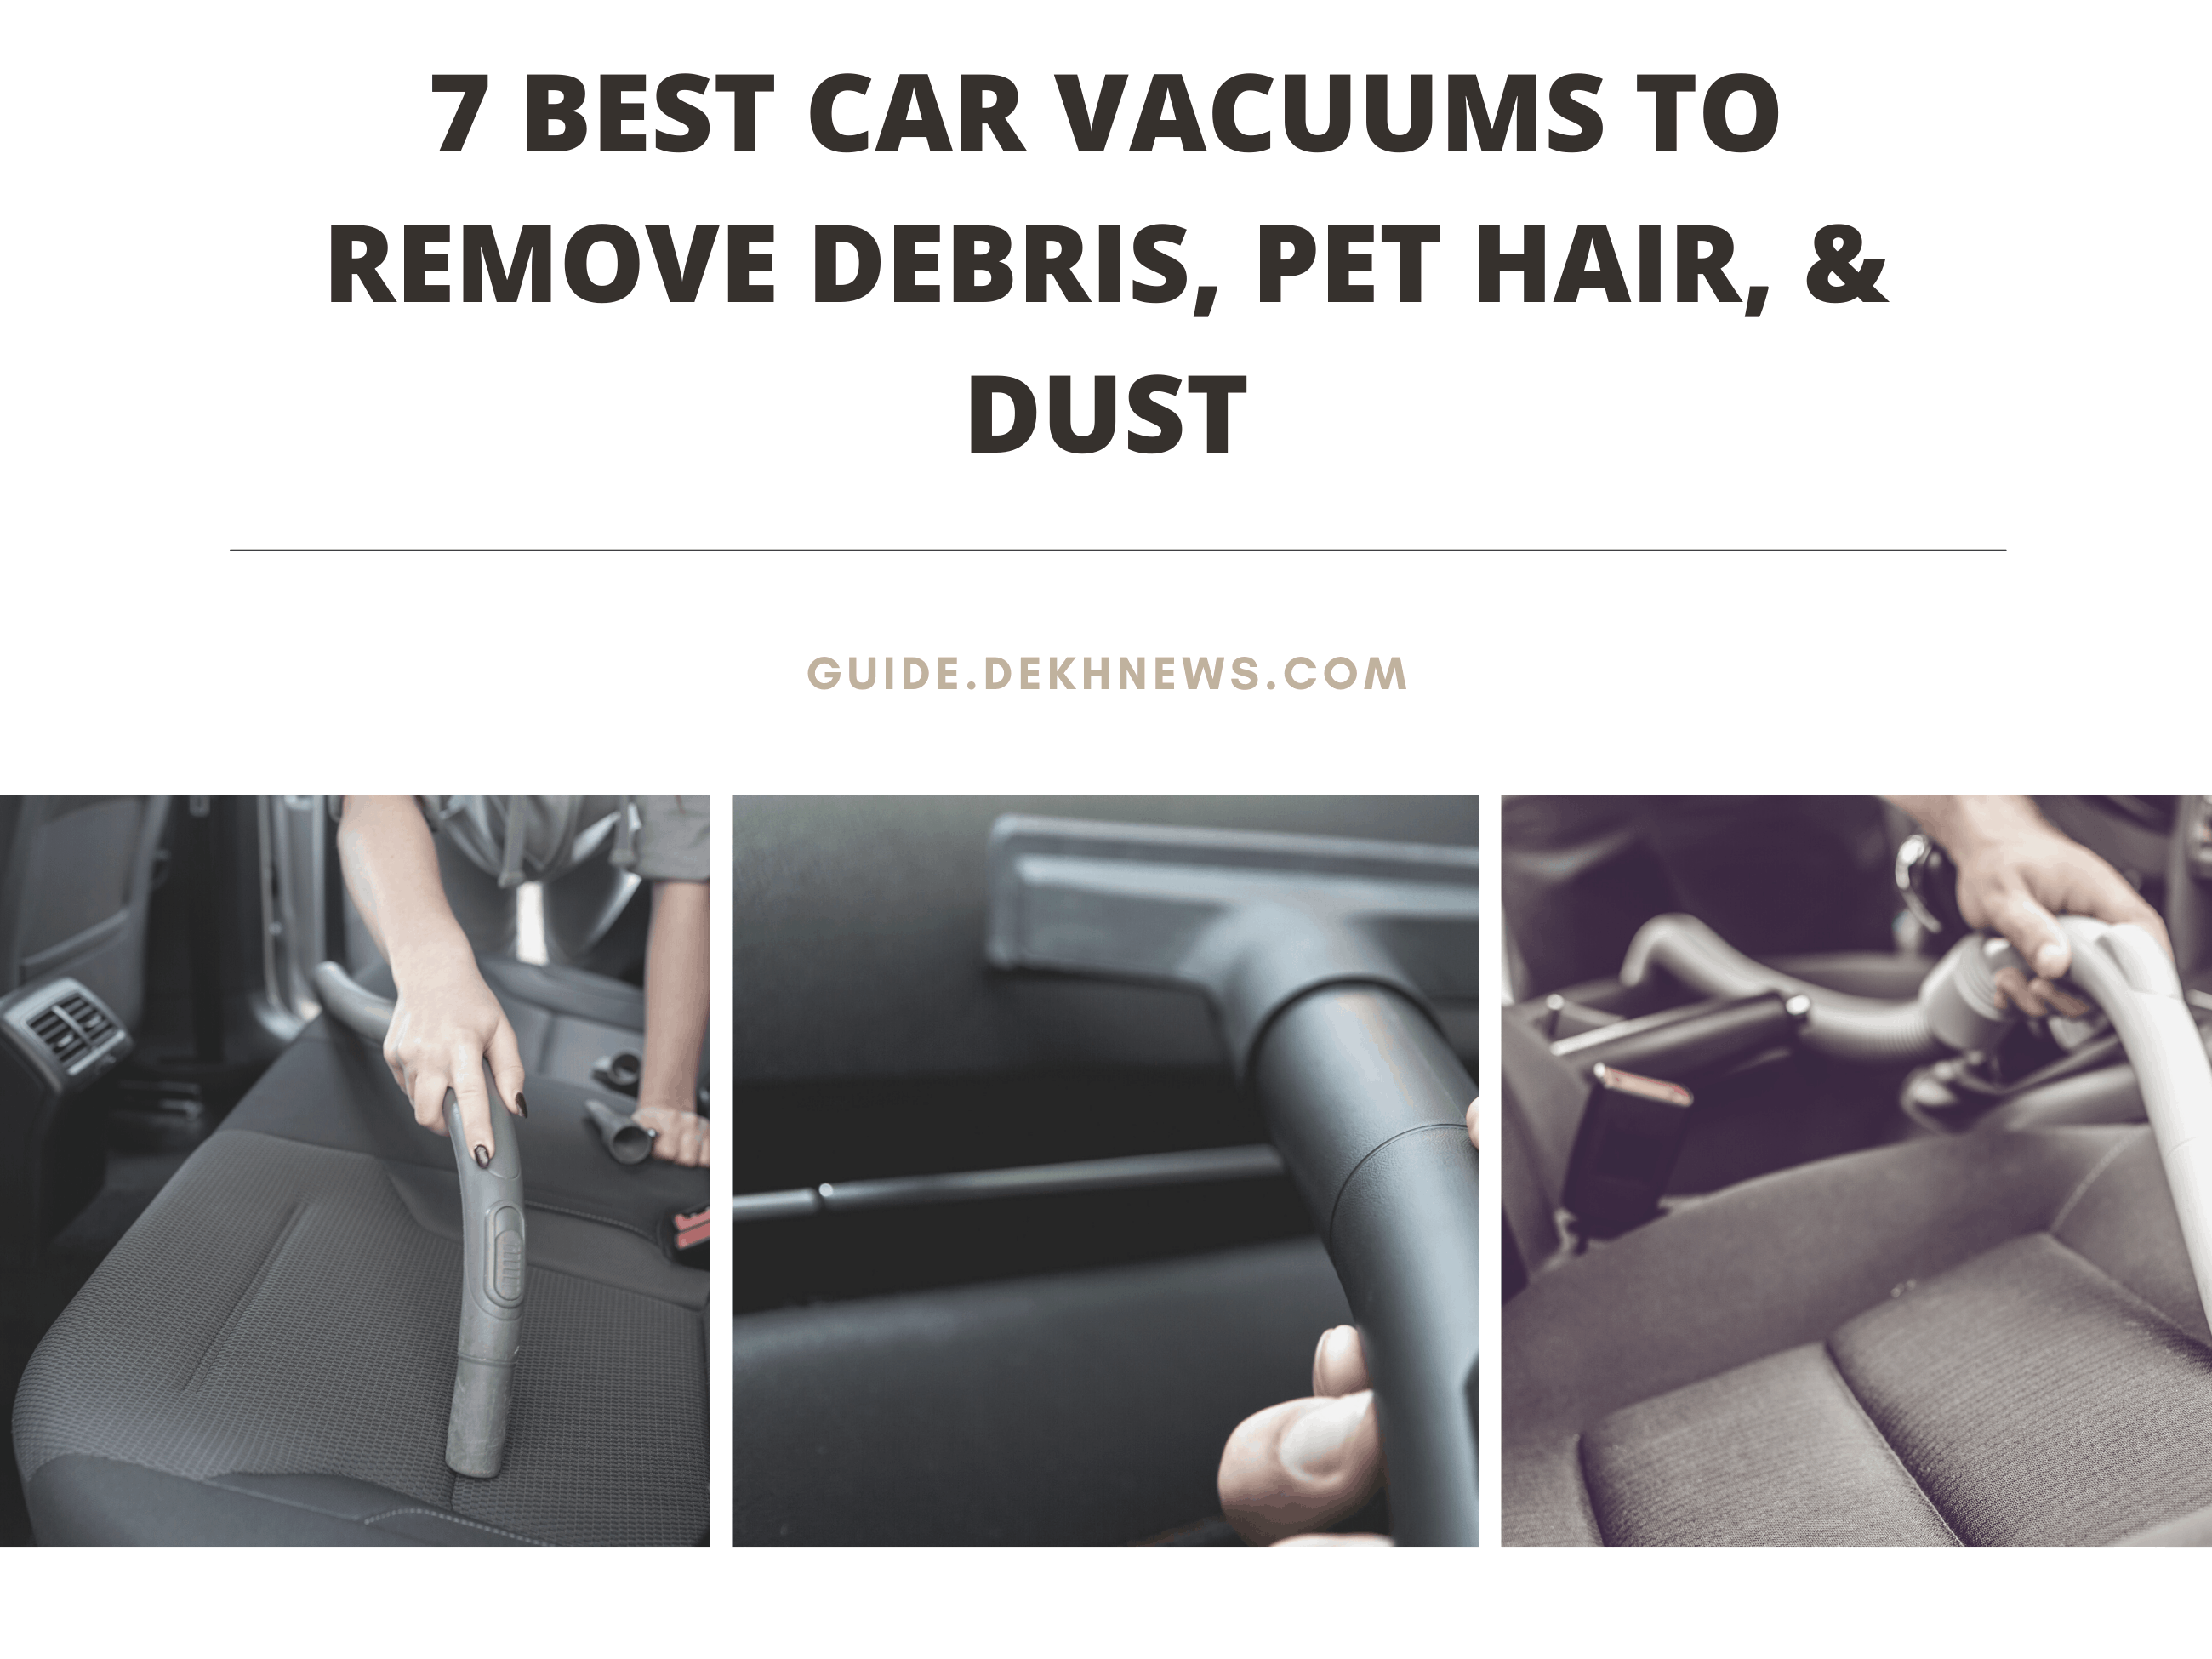 7 Best Car Vacuums to Remove Debris, Pet Hair, & Dust in 2021